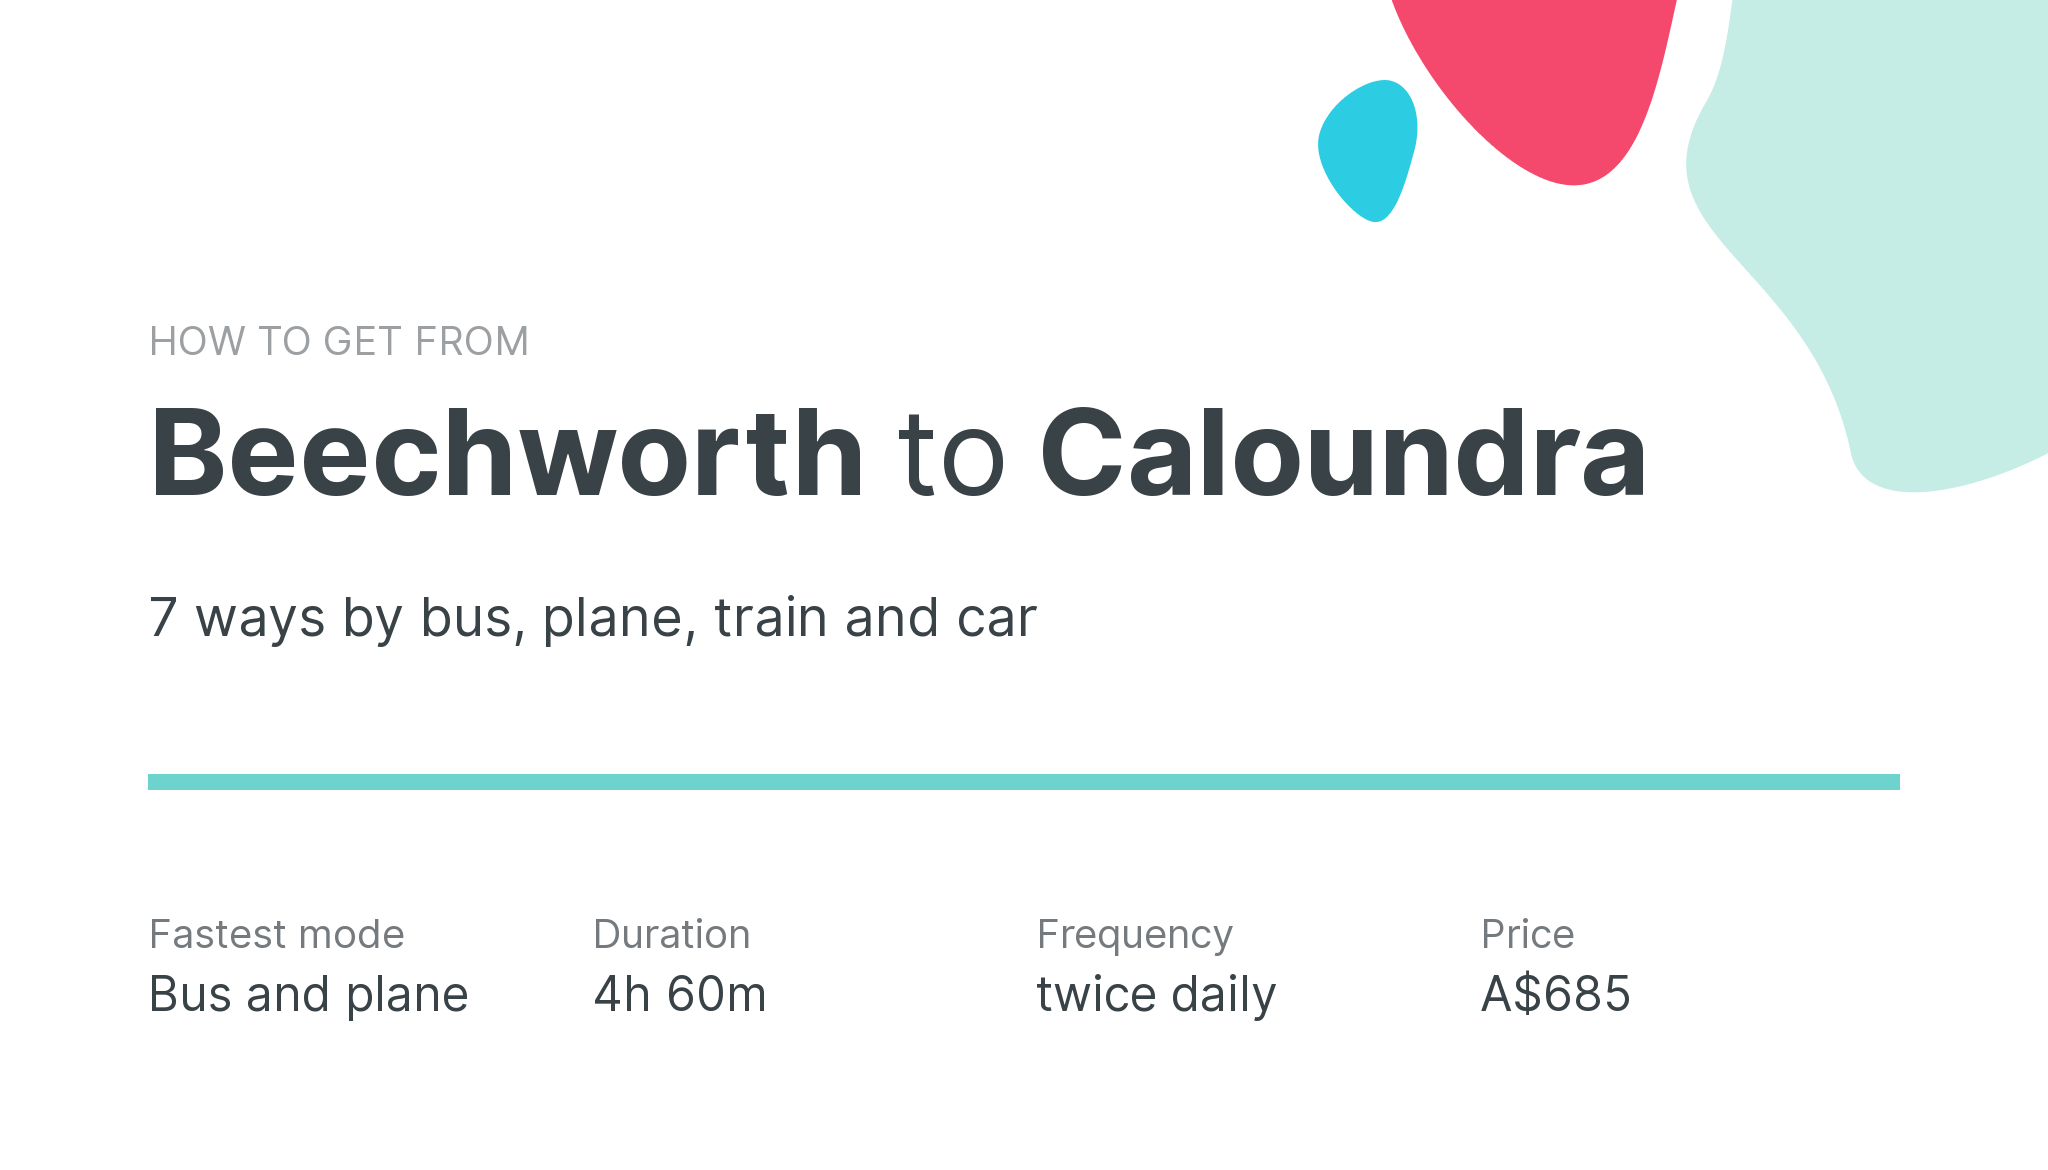 How do I get from Beechworth to Caloundra